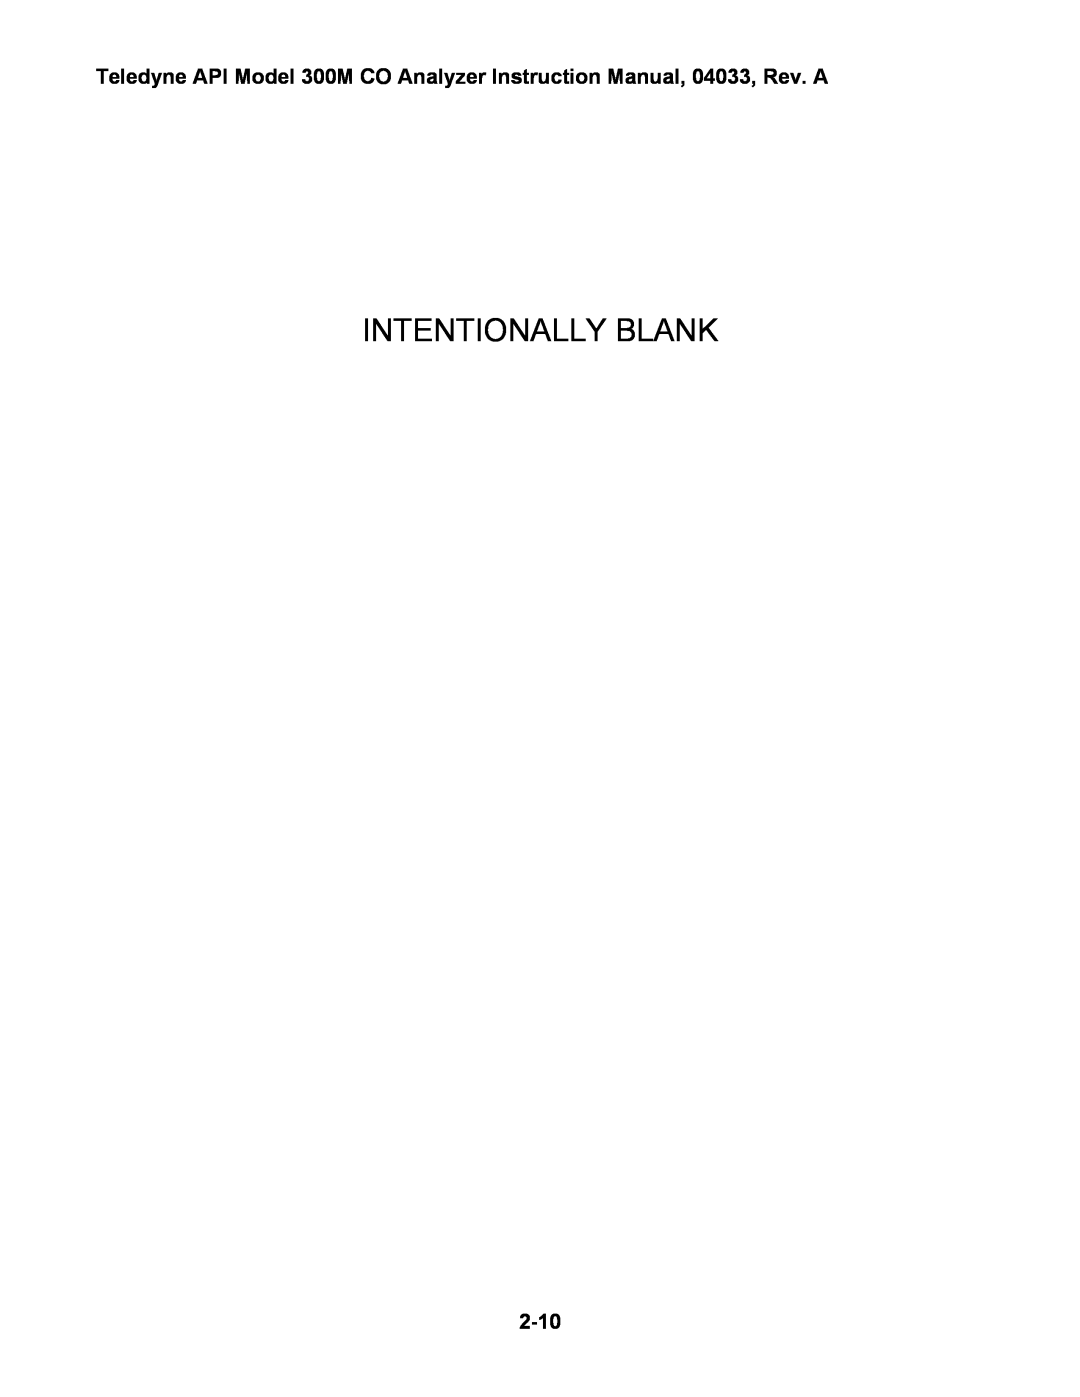 Teledyne 300M instruction manual 2-10, Intentionally Blank 